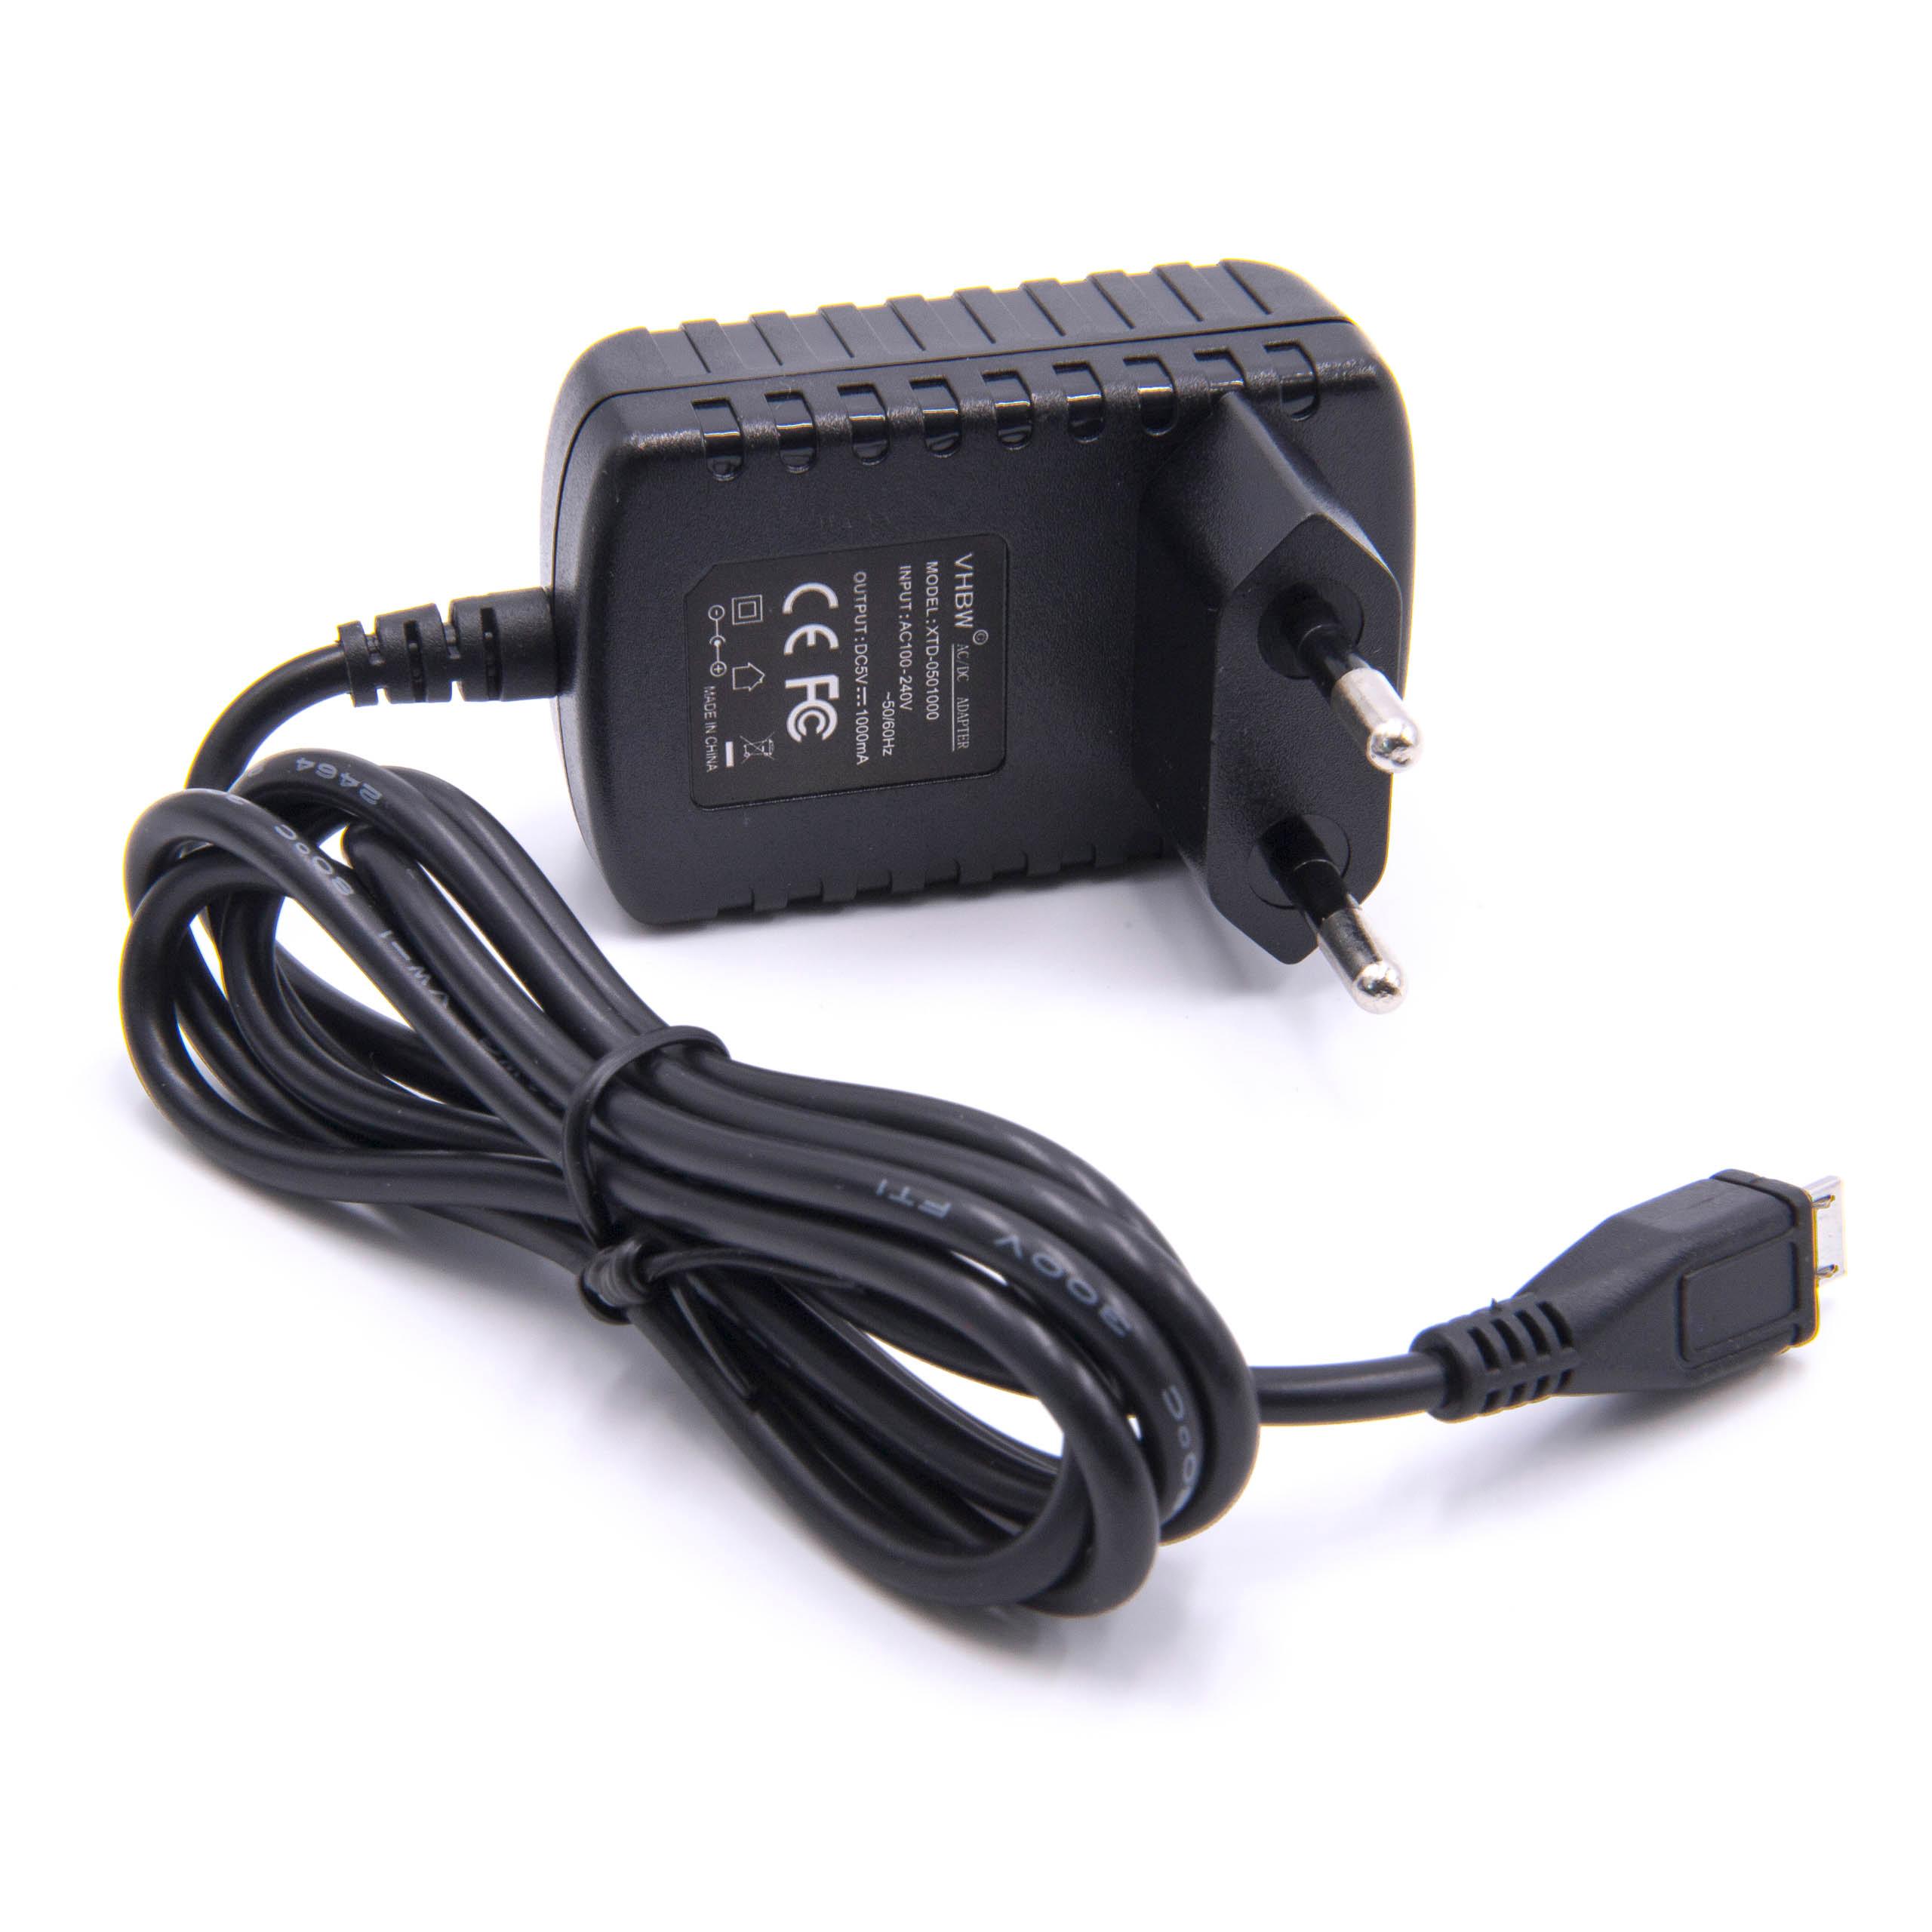 Charger 110-220 V for Bose, Motorola Soundlink Mini 2Mobile Phone, Loudspeaker etc. - Micro USB